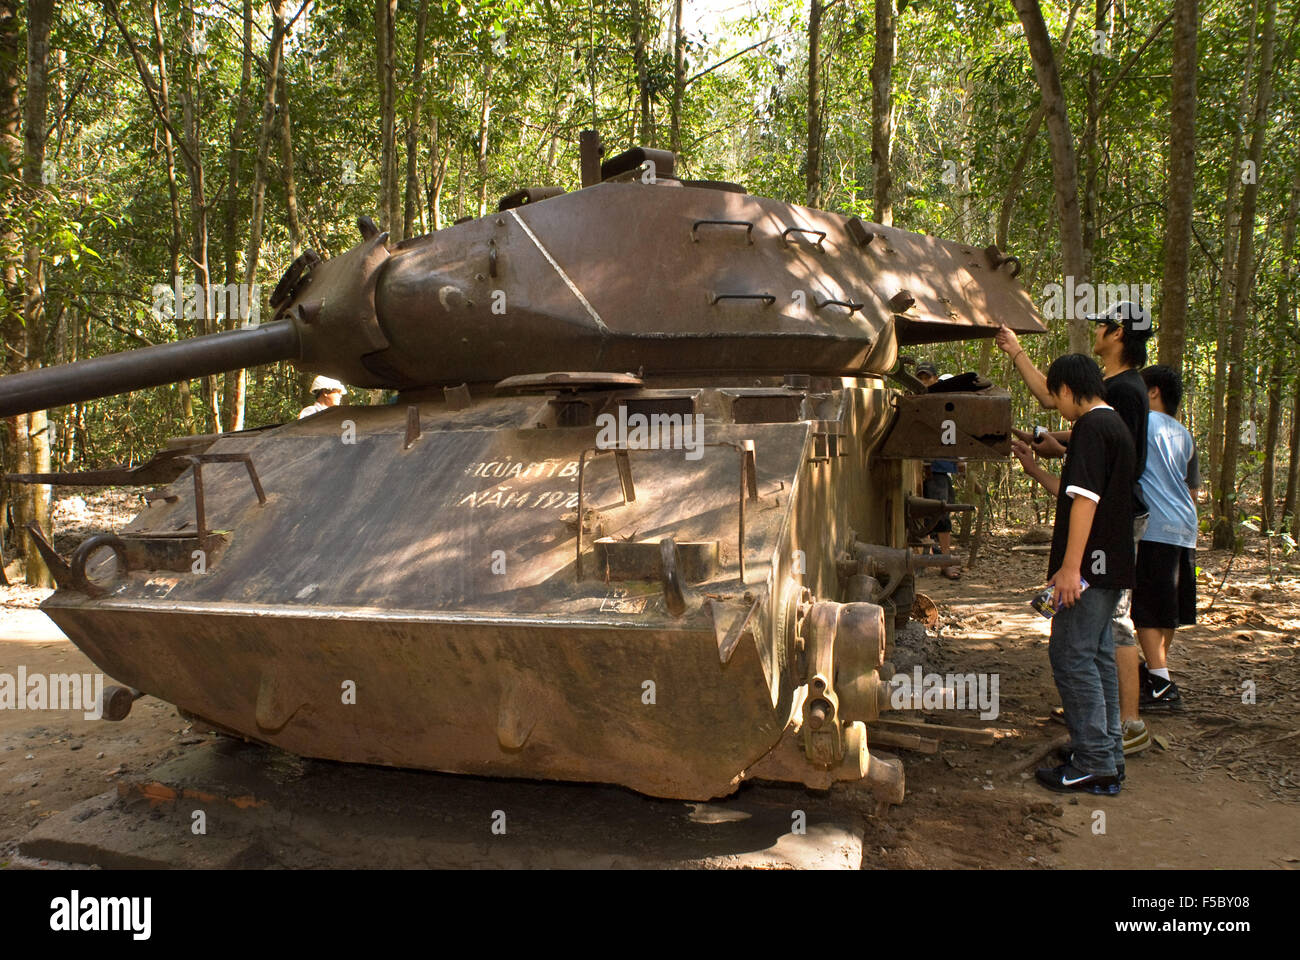 A tank of the Vietnam War. Cu Chi tunnels, Vietnam. American M-41 Tank destroyed by mine in Vietnam War Cu Chi Vietnam. Stock Photo